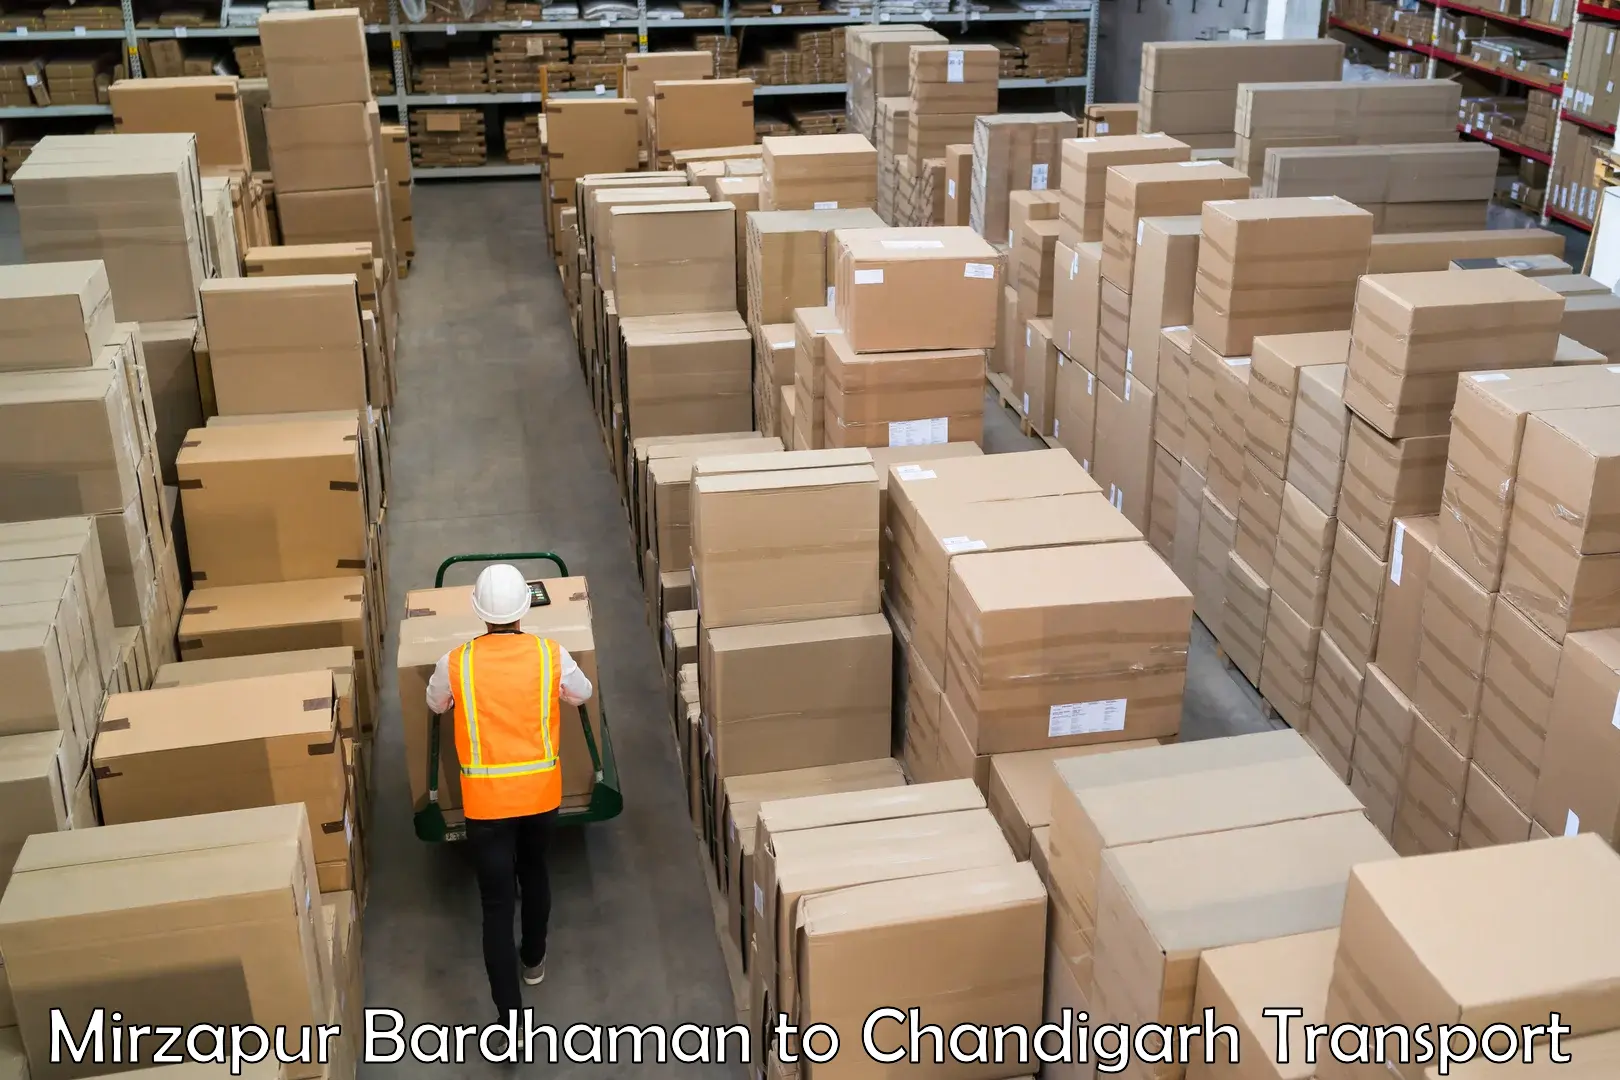 Truck transport companies in India Mirzapur Bardhaman to Chandigarh